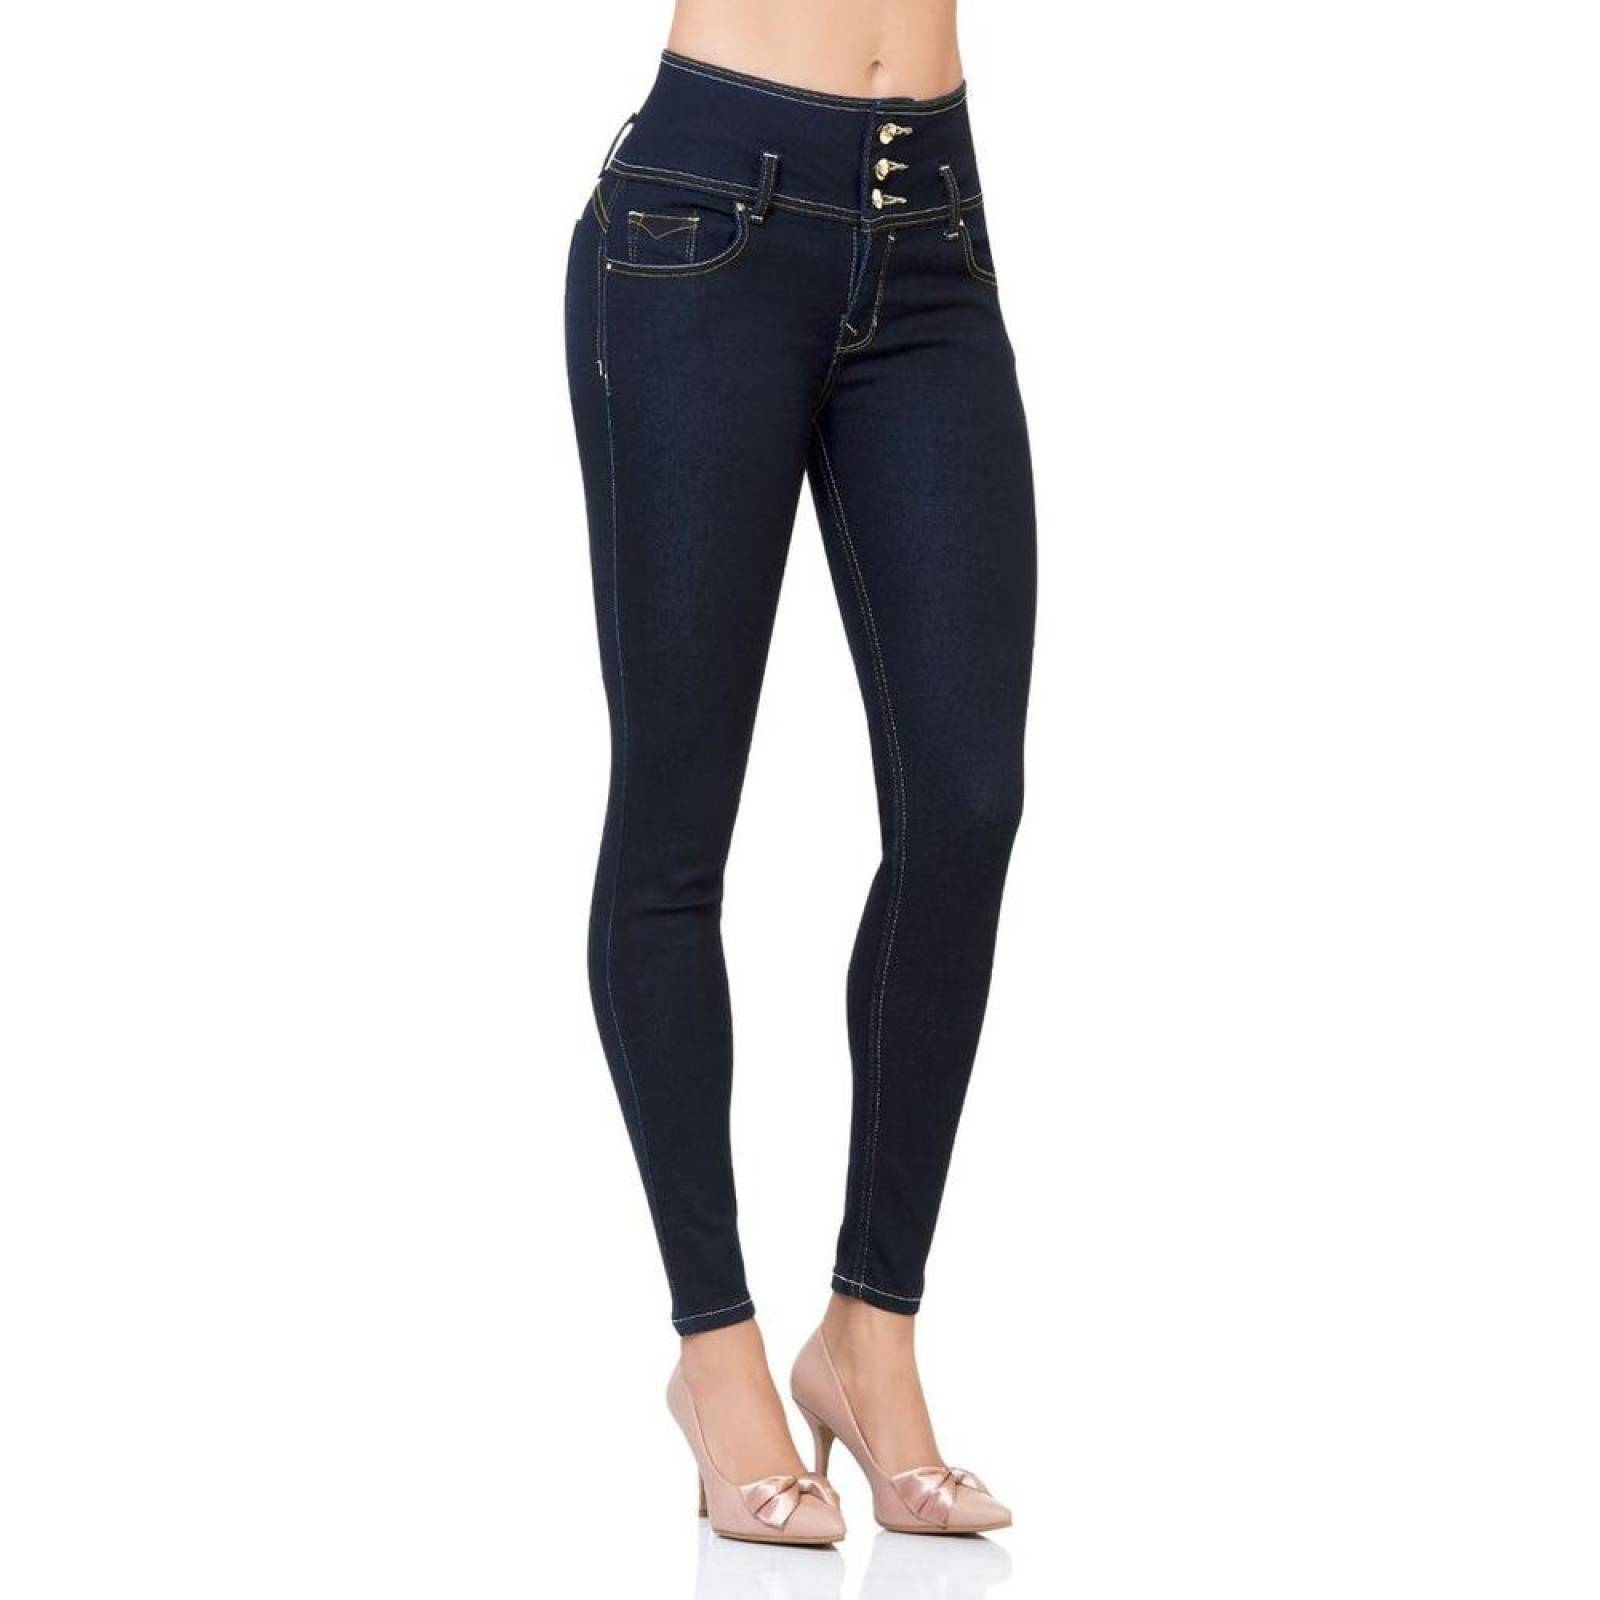 Jeans Básico Mujer Furor Indigo 62105007 Mezclilla Stretch 